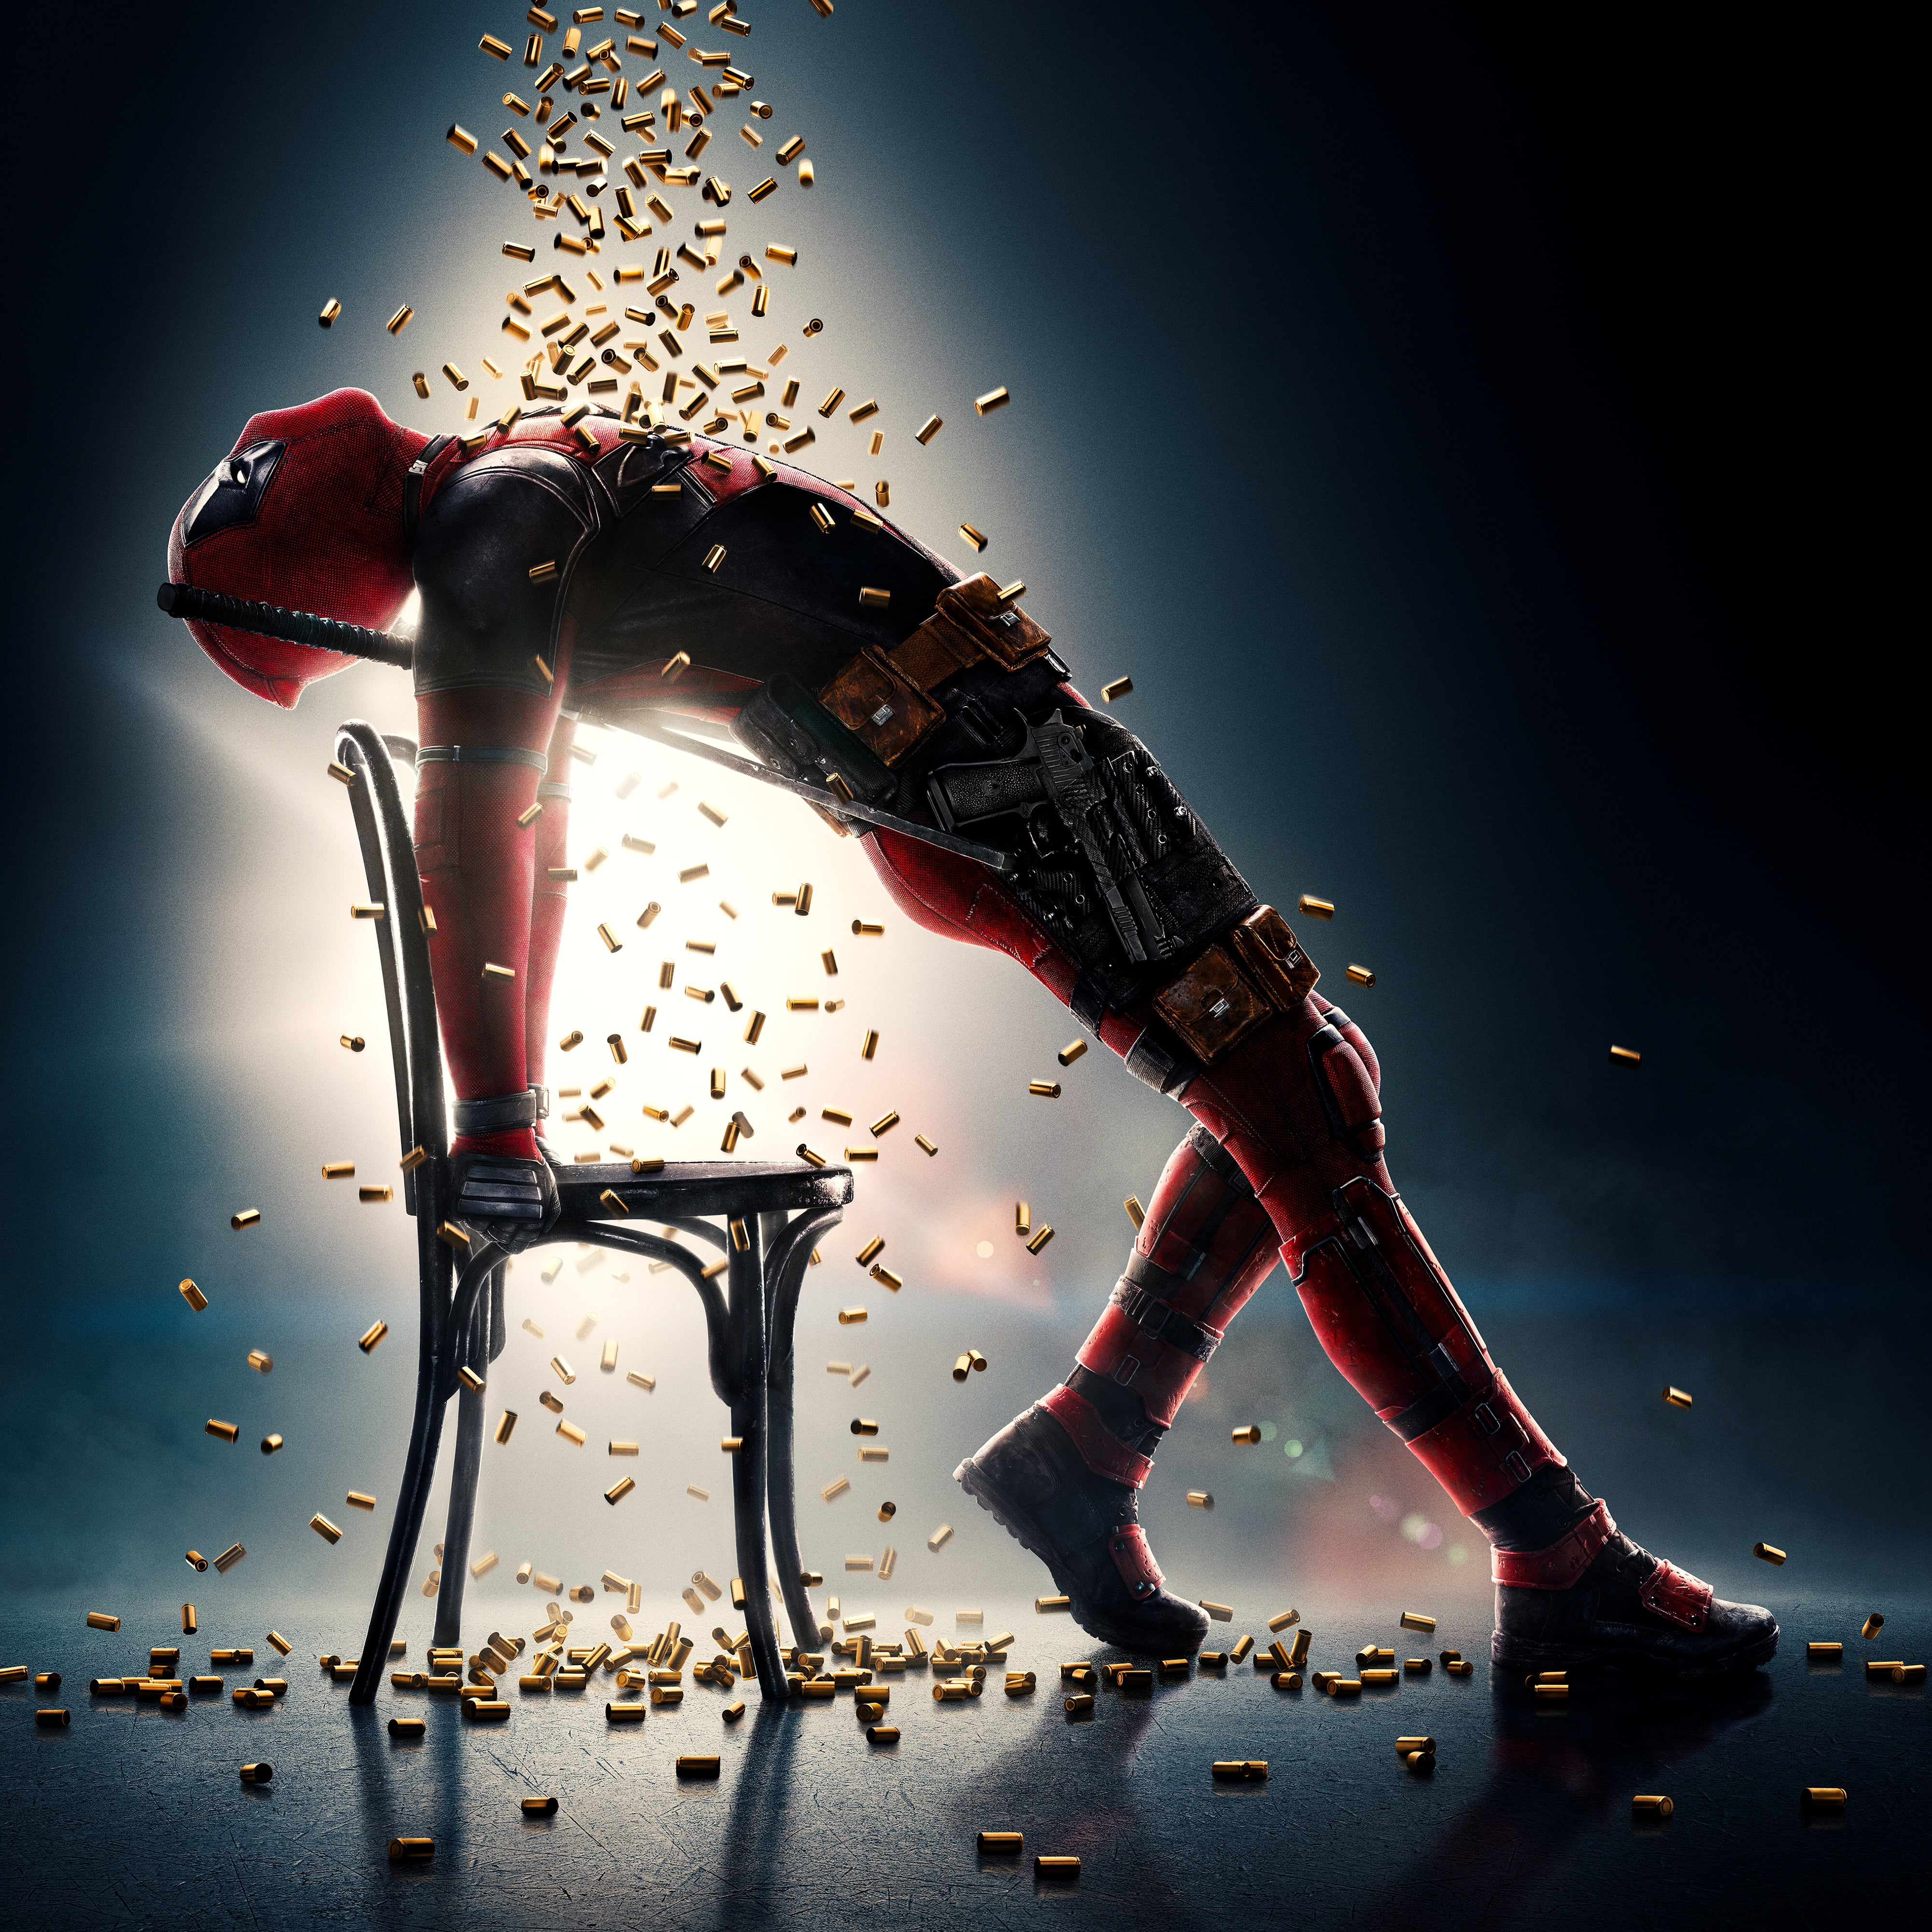 Marvel Deadpool 2 digital wallpaper, shell casing, chair, superhero